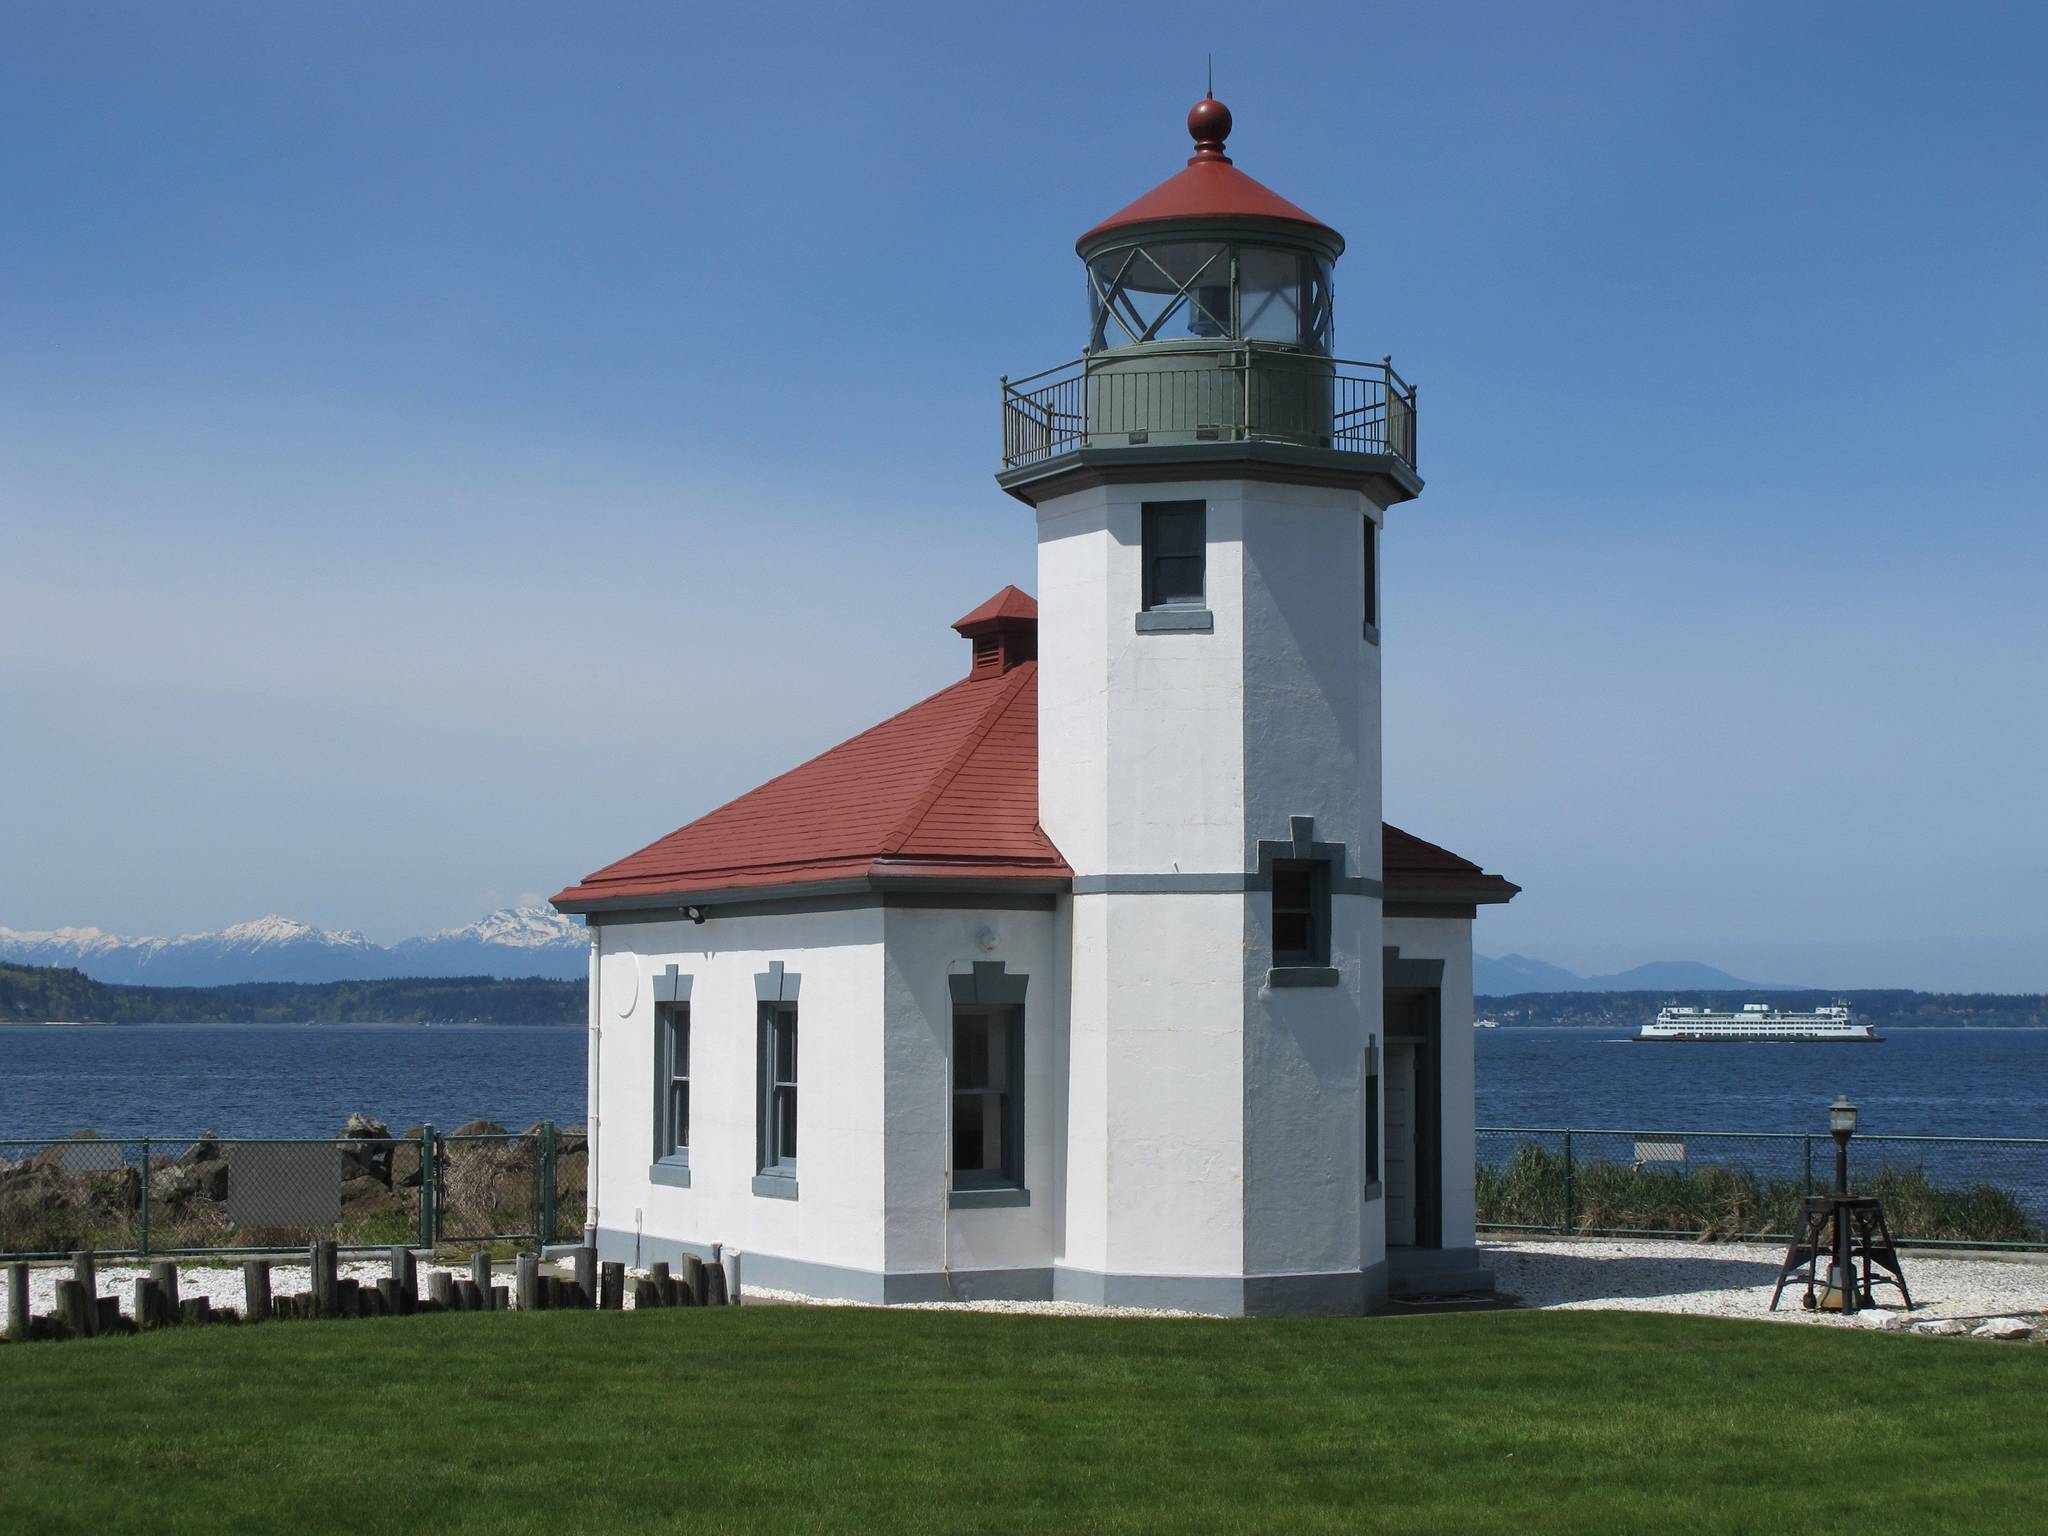 West Seattle’s Alki Point Lighthouse. Photo by Robert Lanier/Coast Guard News